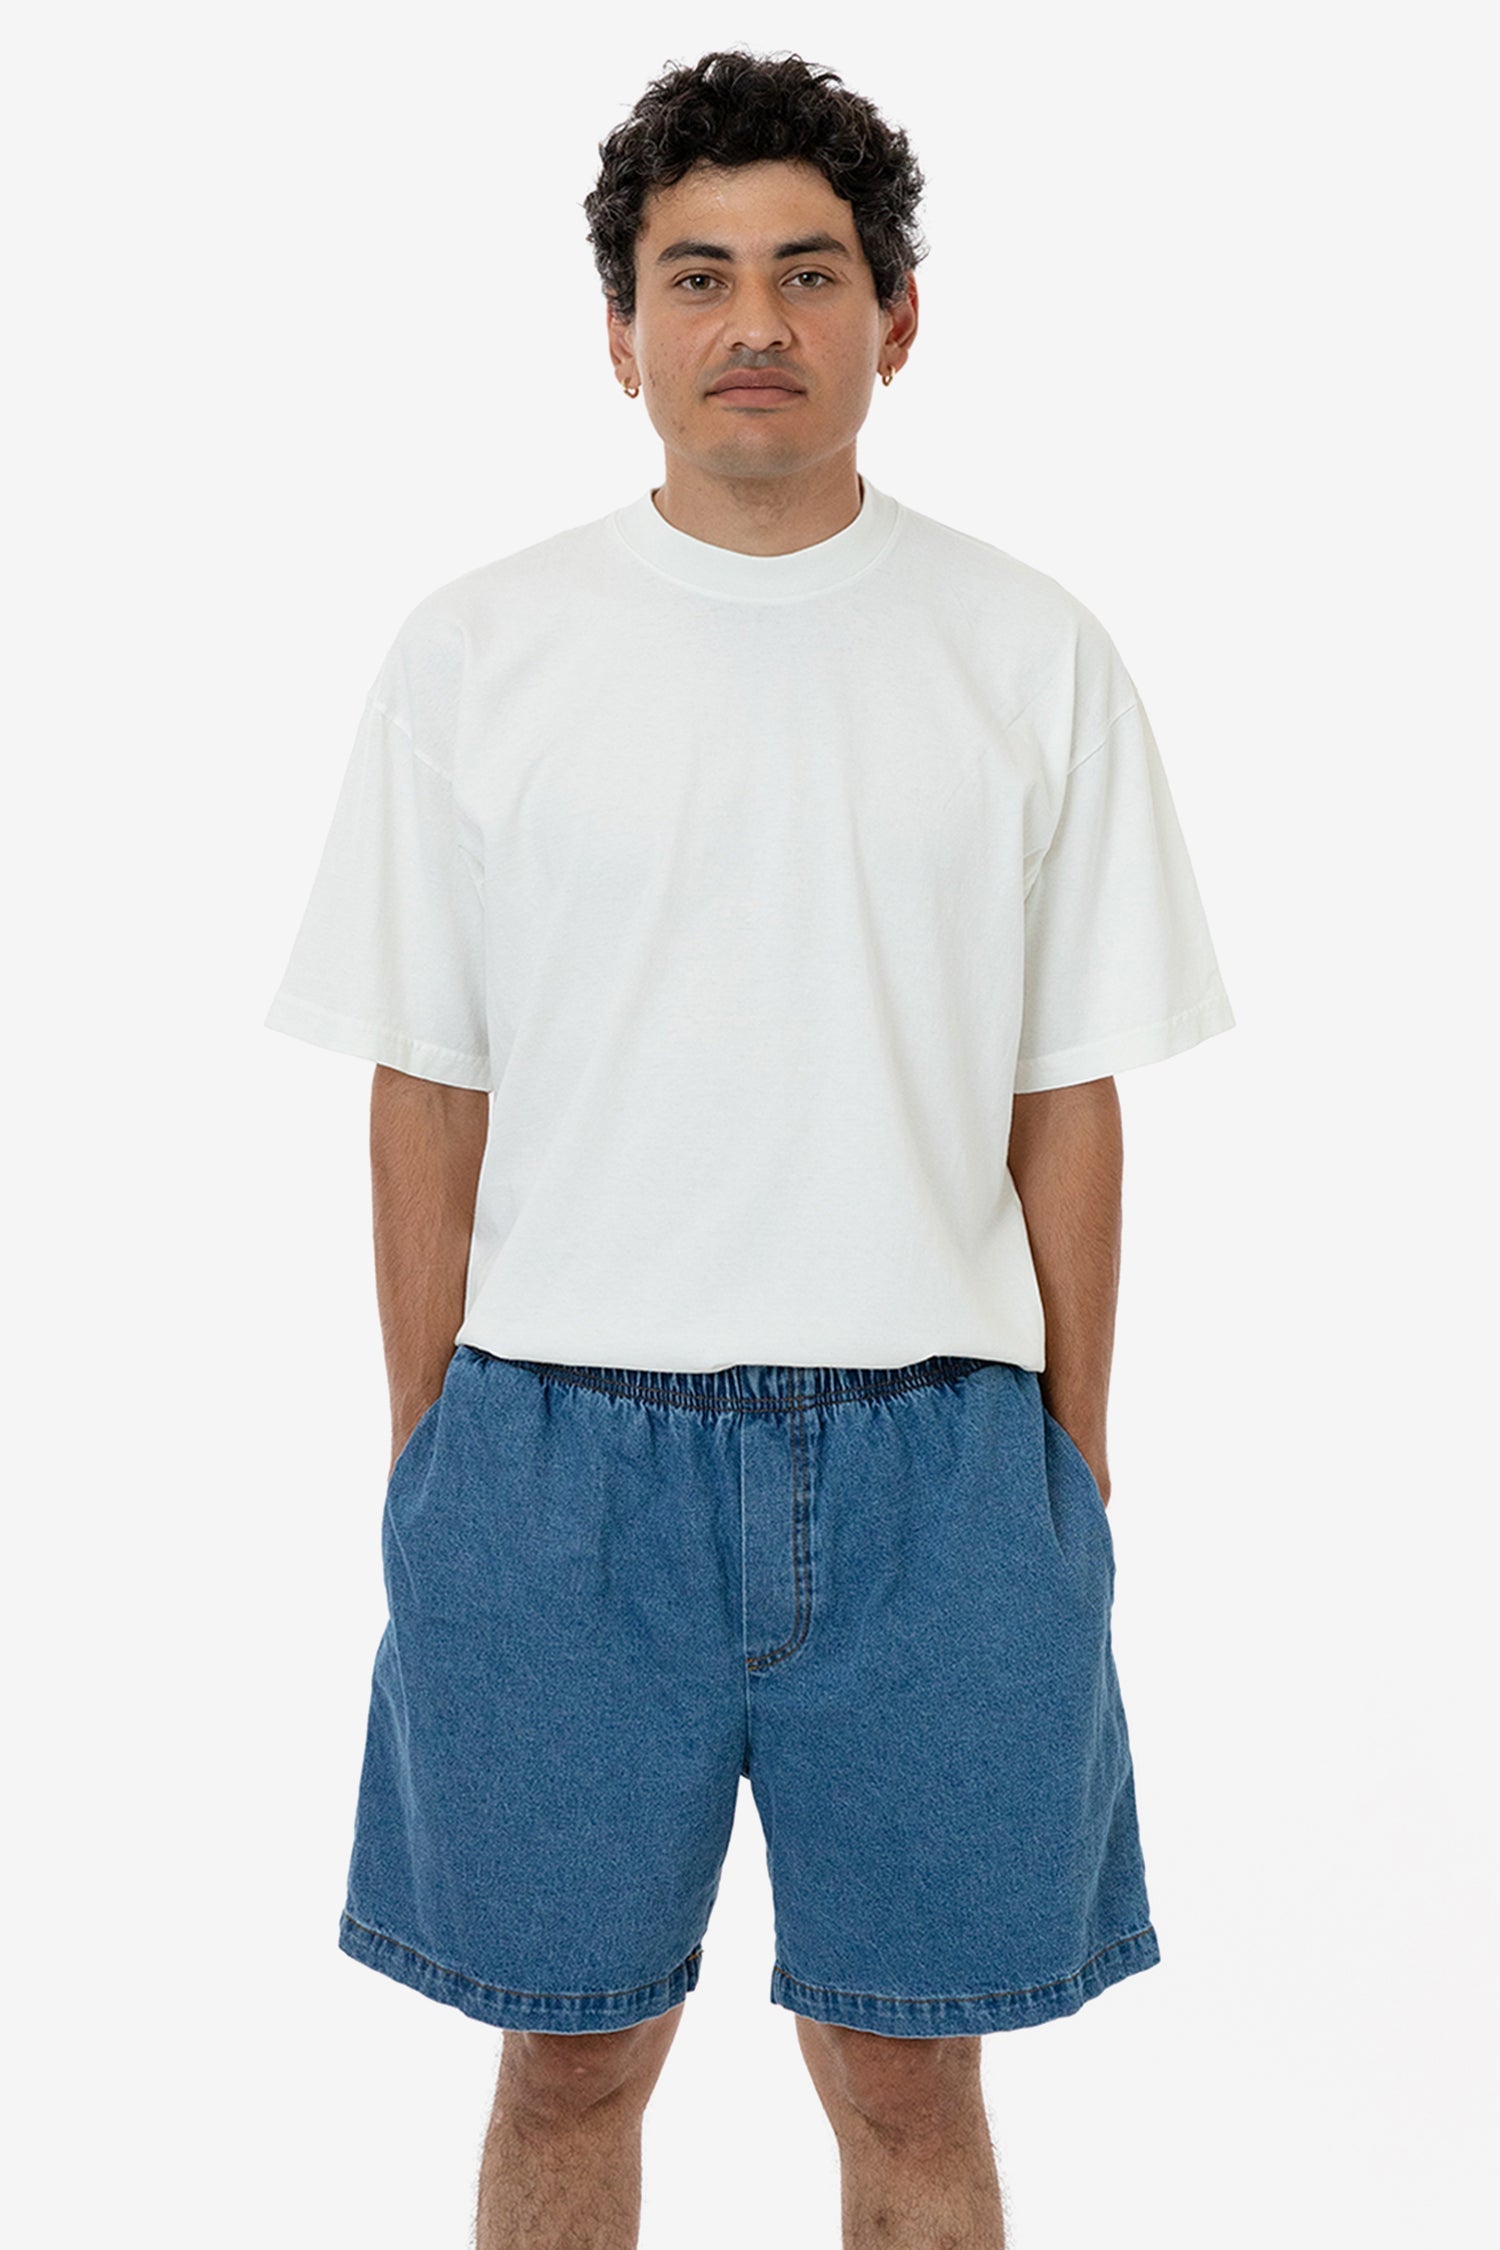 Los Angeles Apparel | Baggy Denim Shorts for Men in Dark Medium Wash